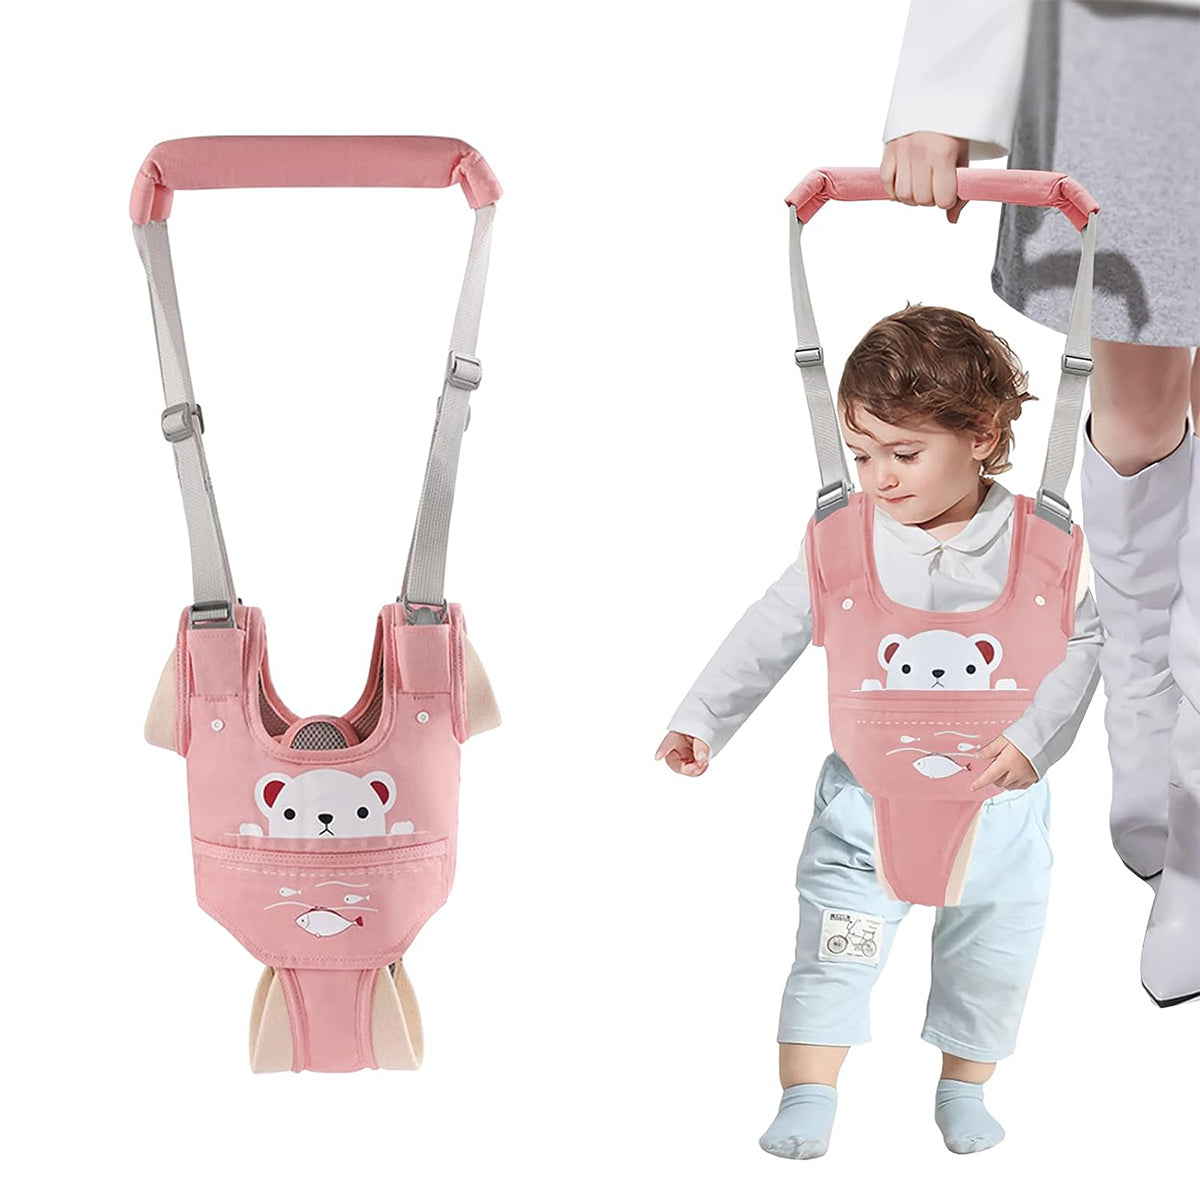 Baby Walking Belt,Toddler Safety Harness,Walking Assistant for Babies,Secure Baby Walker,Infant Walking Support Strap